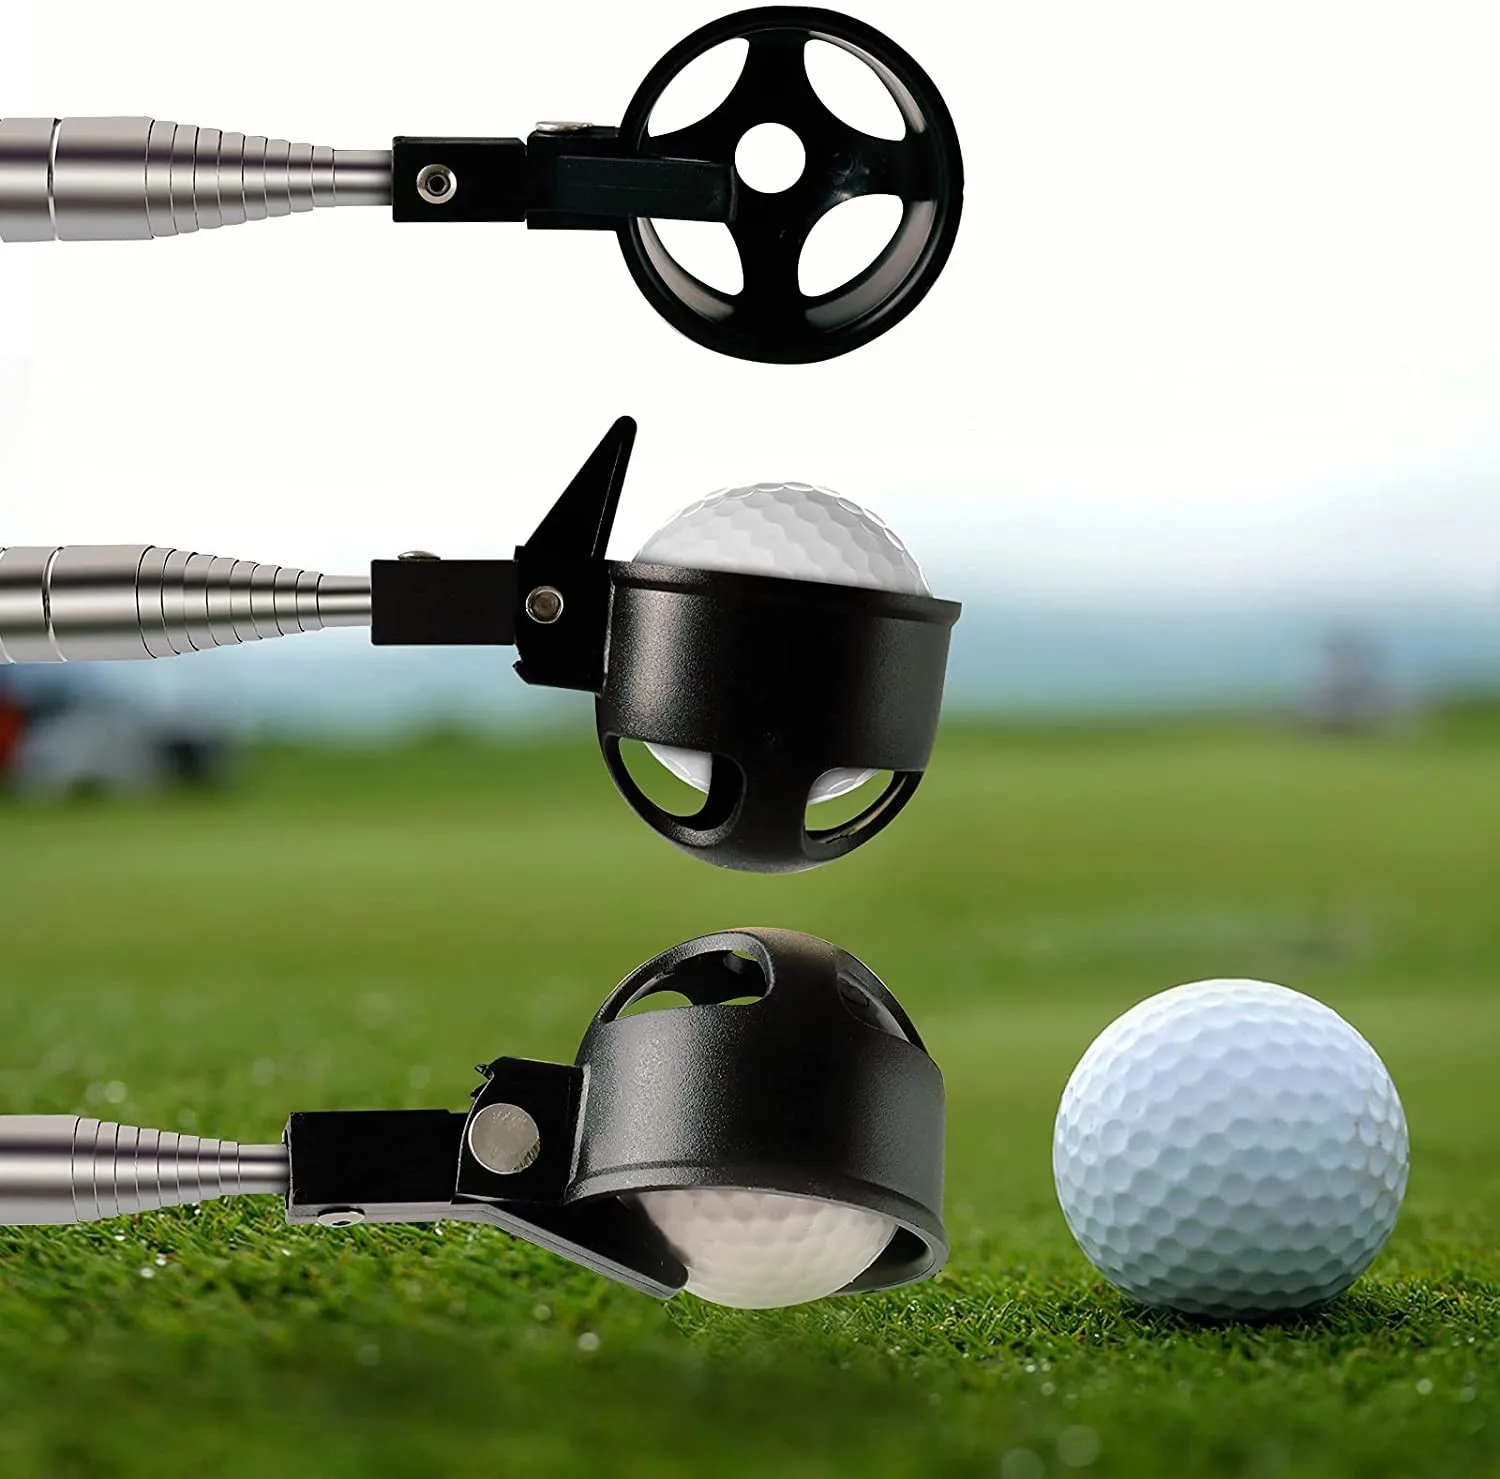 Scoop-style Golf Ball Retrievers